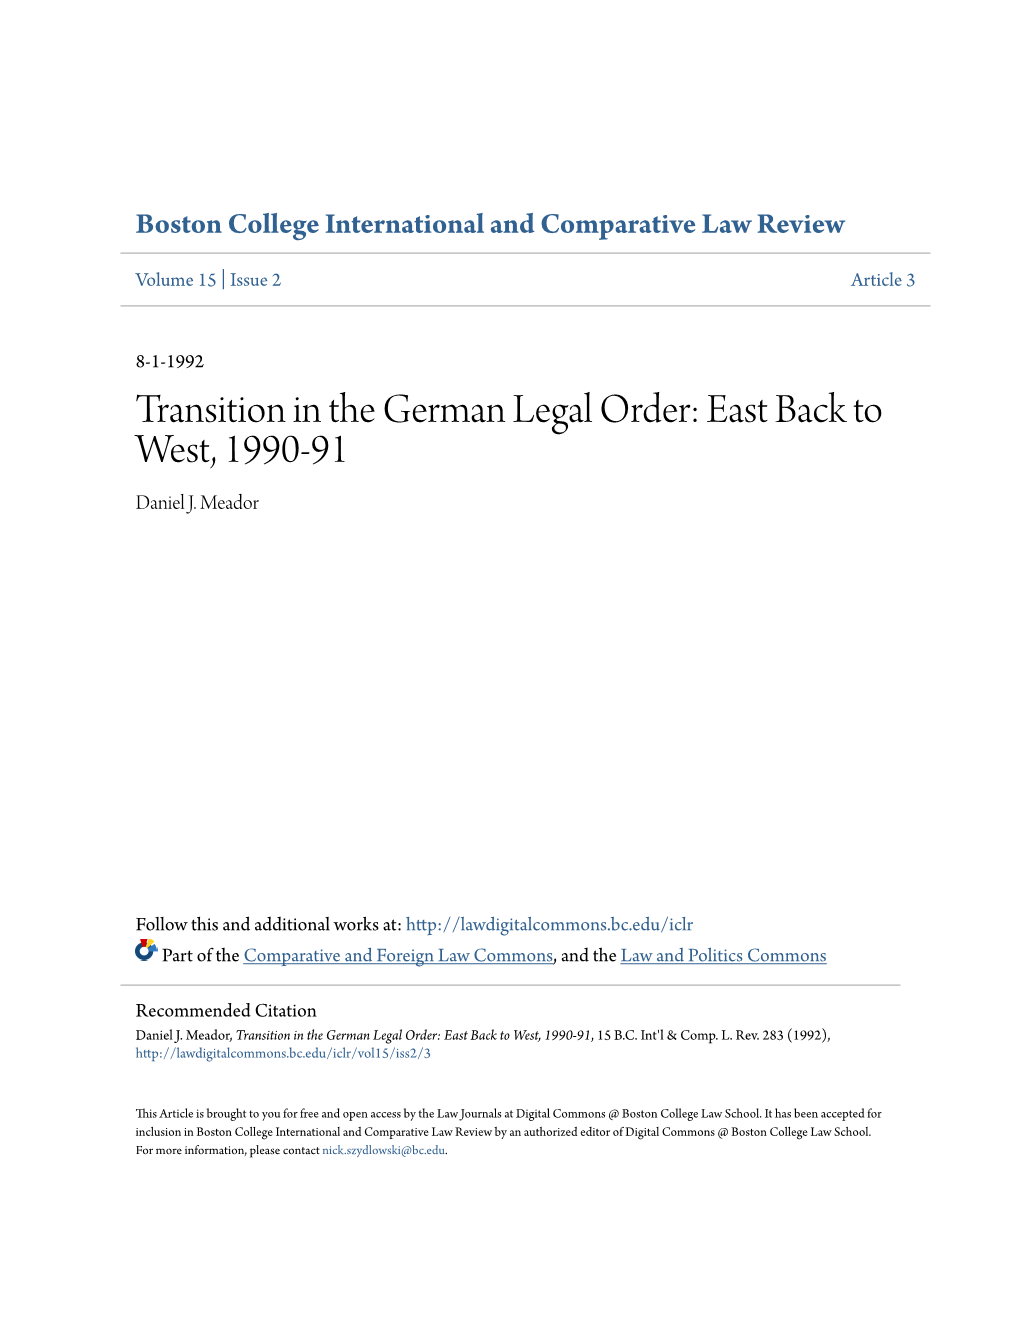 Transition in the German Legal Order: East Back to West, 1990-91 Daniel J